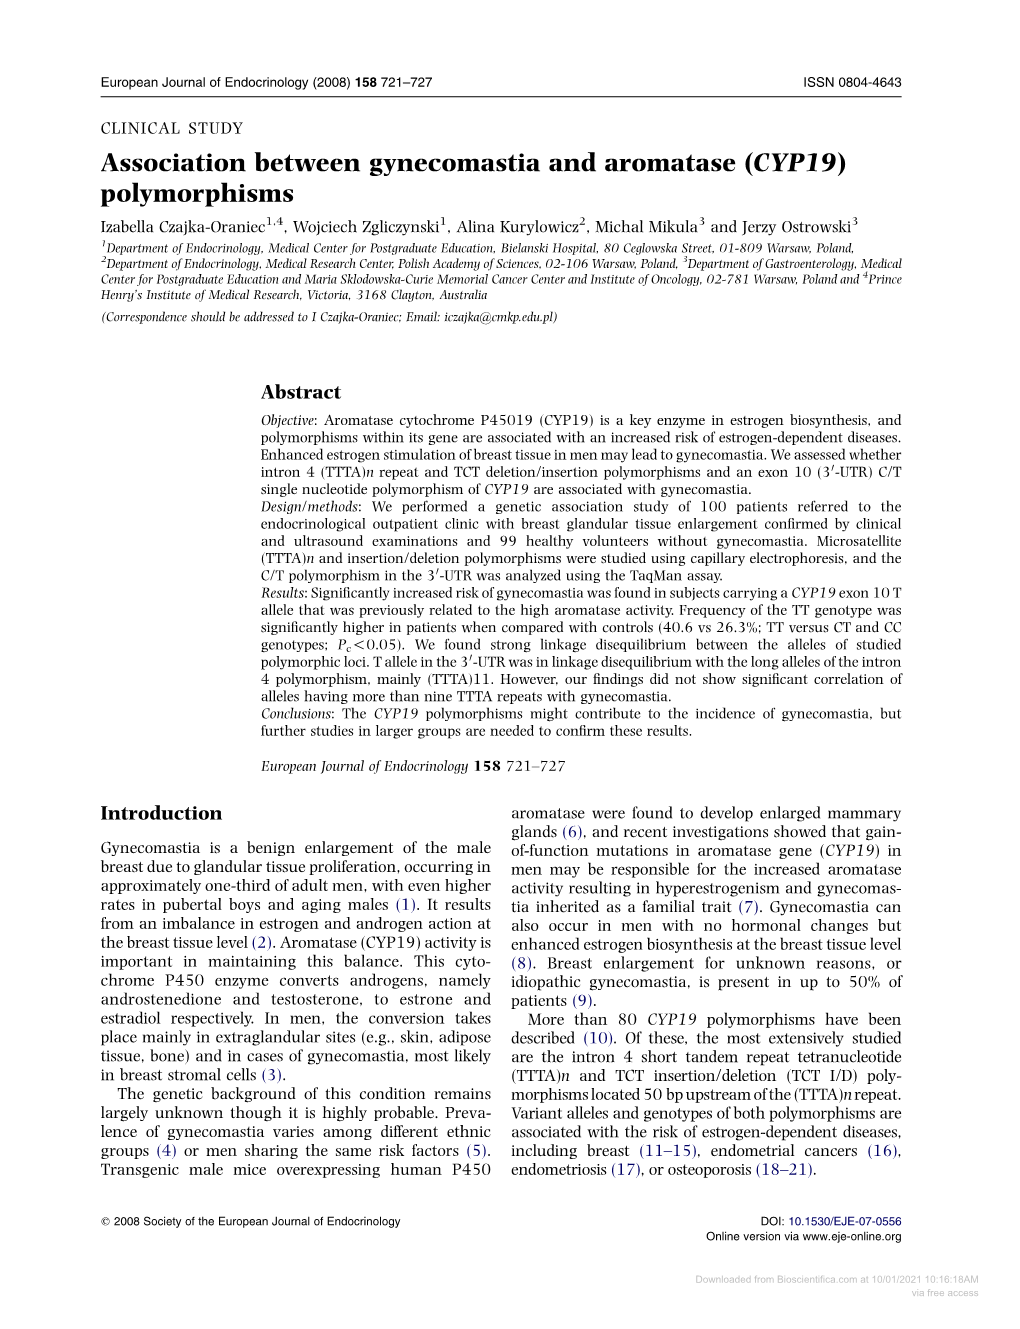 Association Between Gynecomastia and Aromatase (CYP19